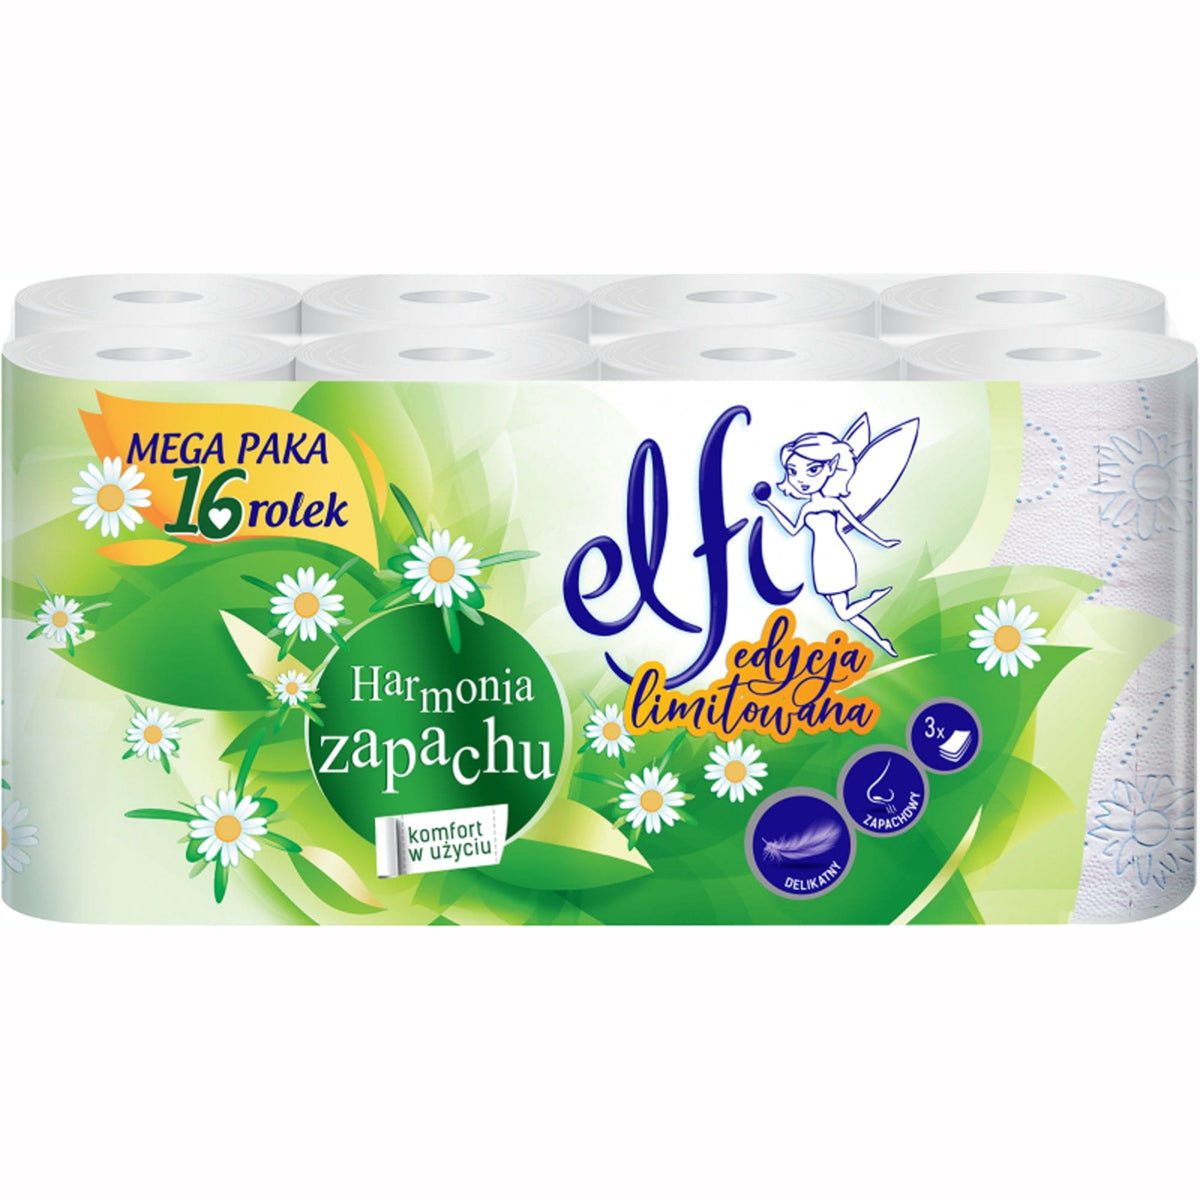 Produkt ELFI Papier toaletowy Papier toaletowy Elfi Fantasy 16 rolek 3-warstwy S00475